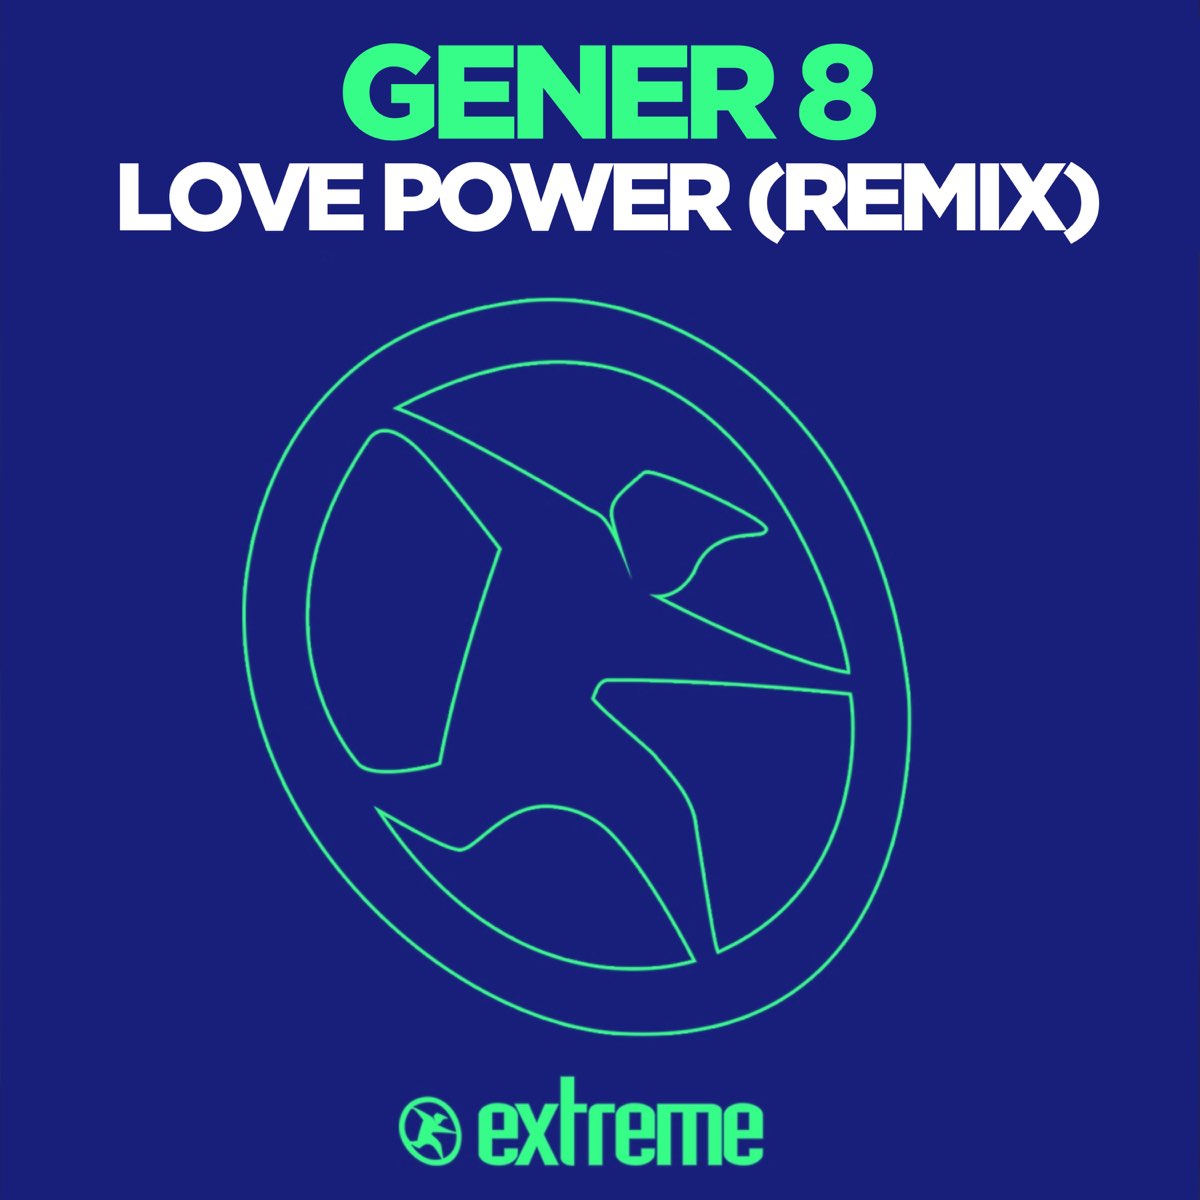 Power remixed. Power of Love.